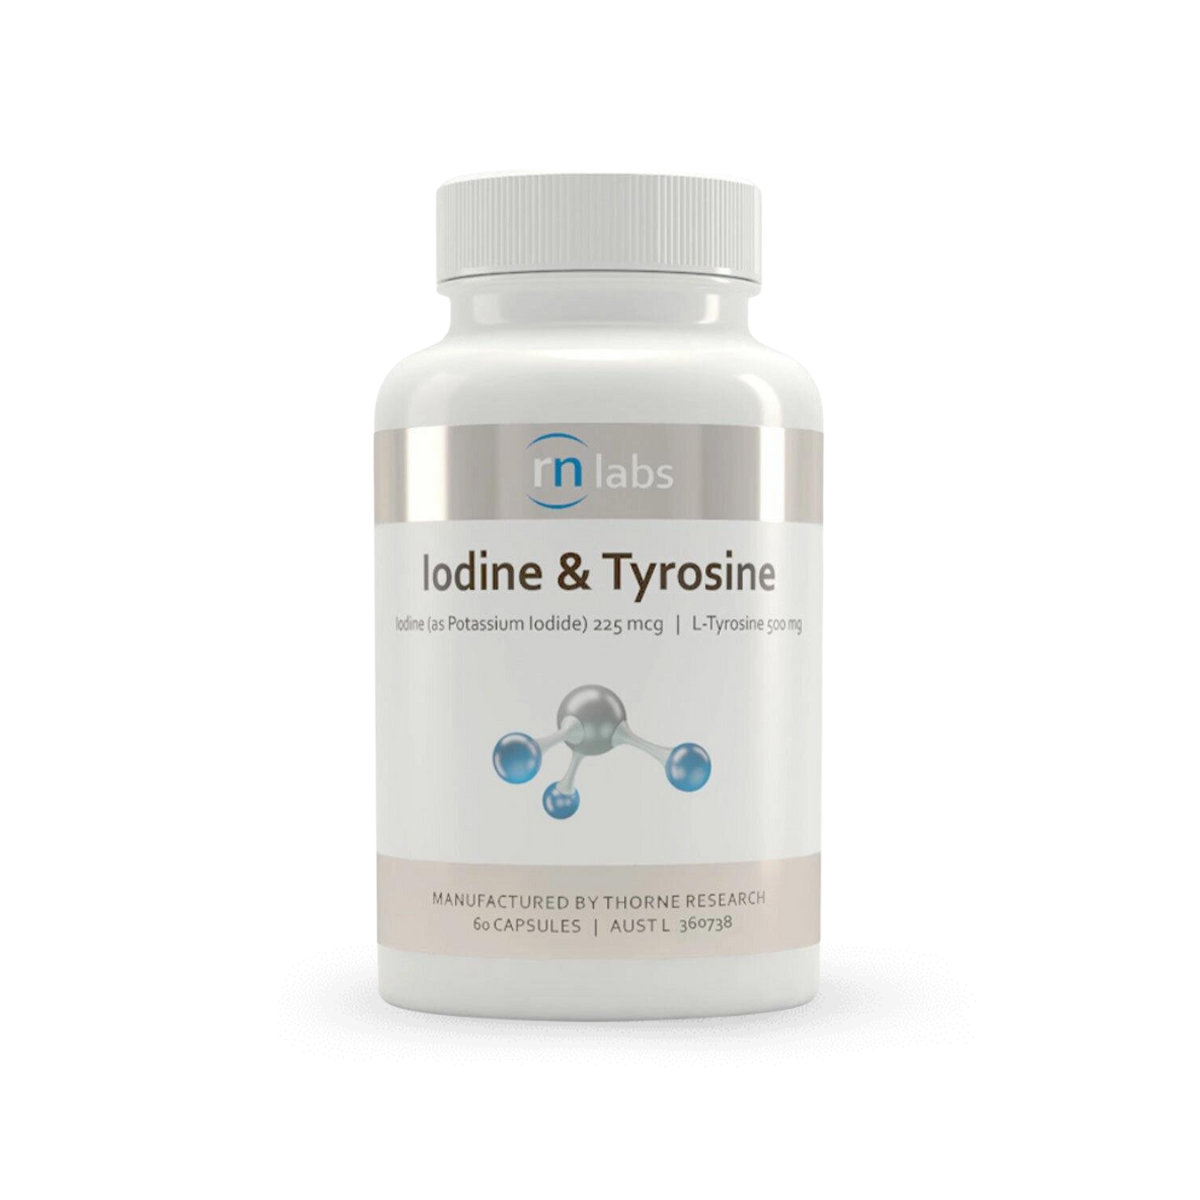 RN Labs Iodine & Tyrosine 60 Capsules